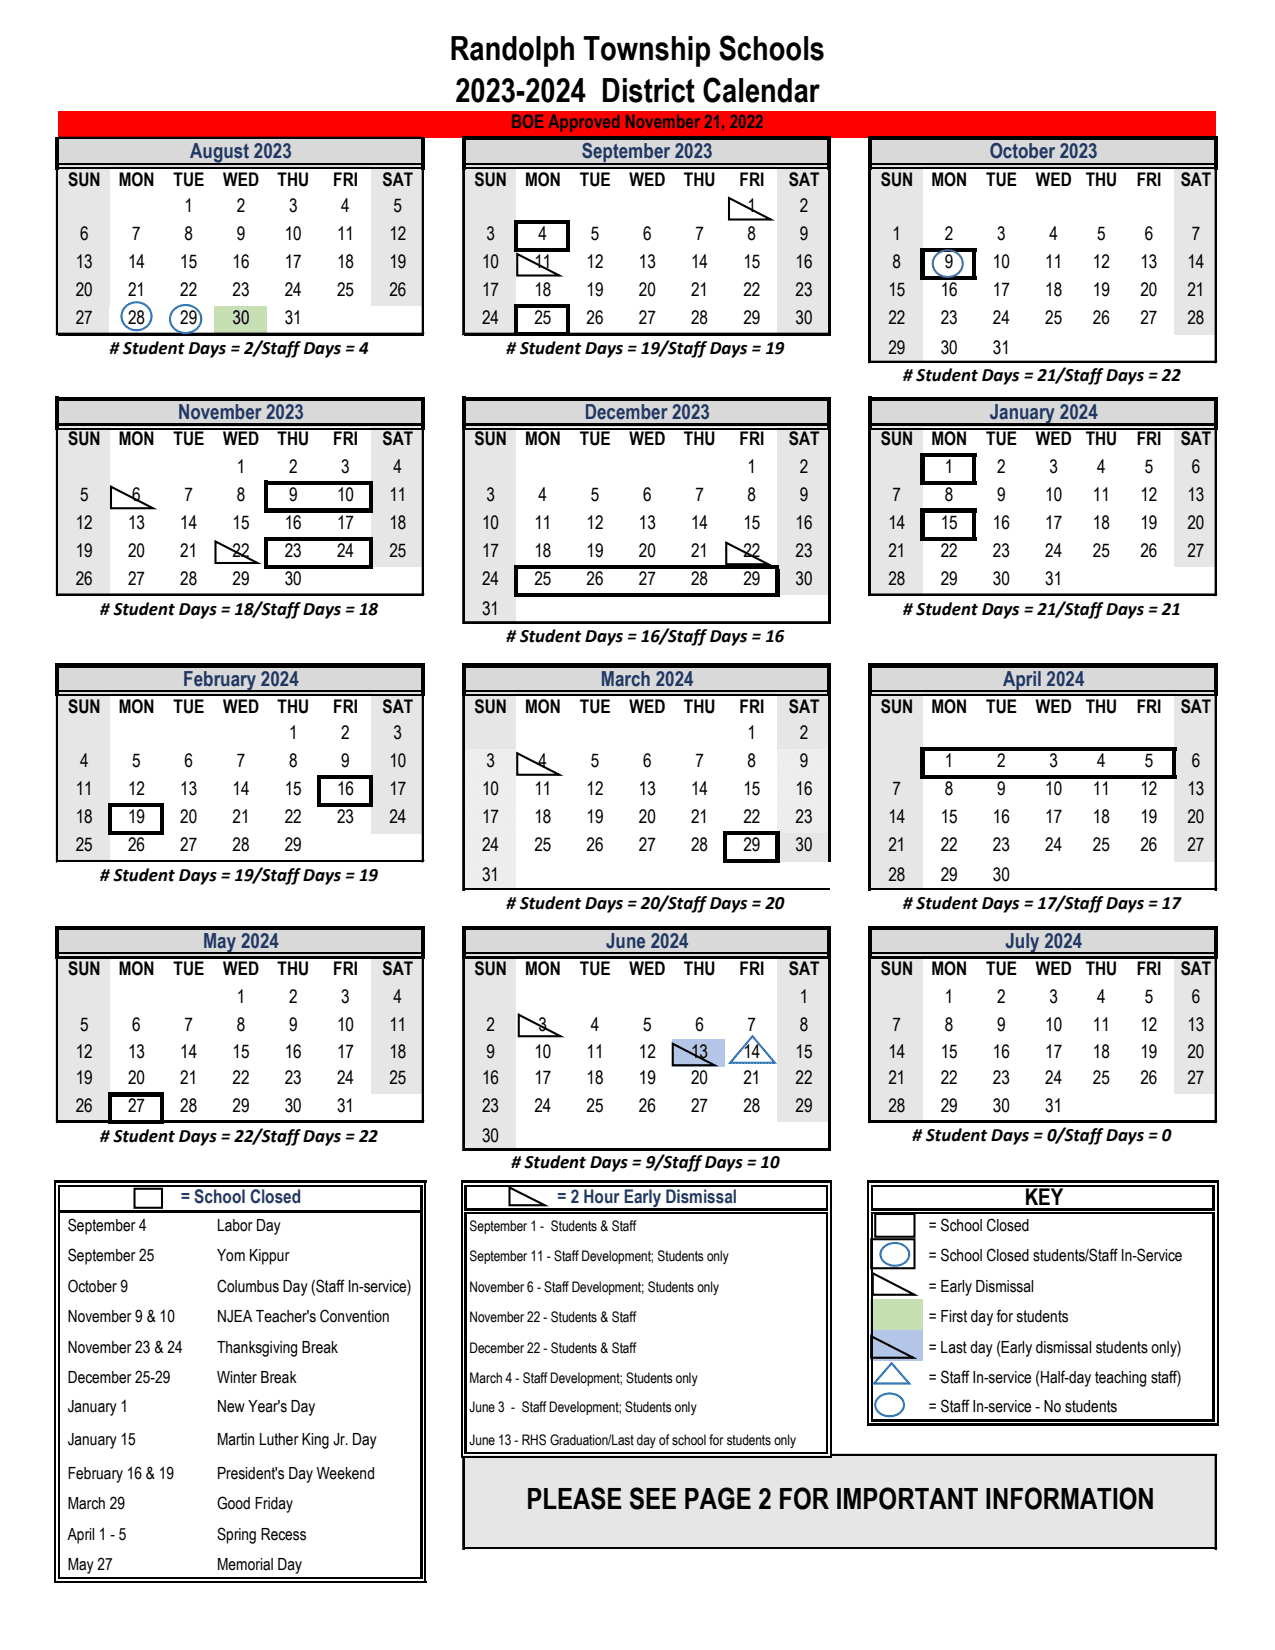 Randolph Township School District Calendar 2023-2024 in PDF